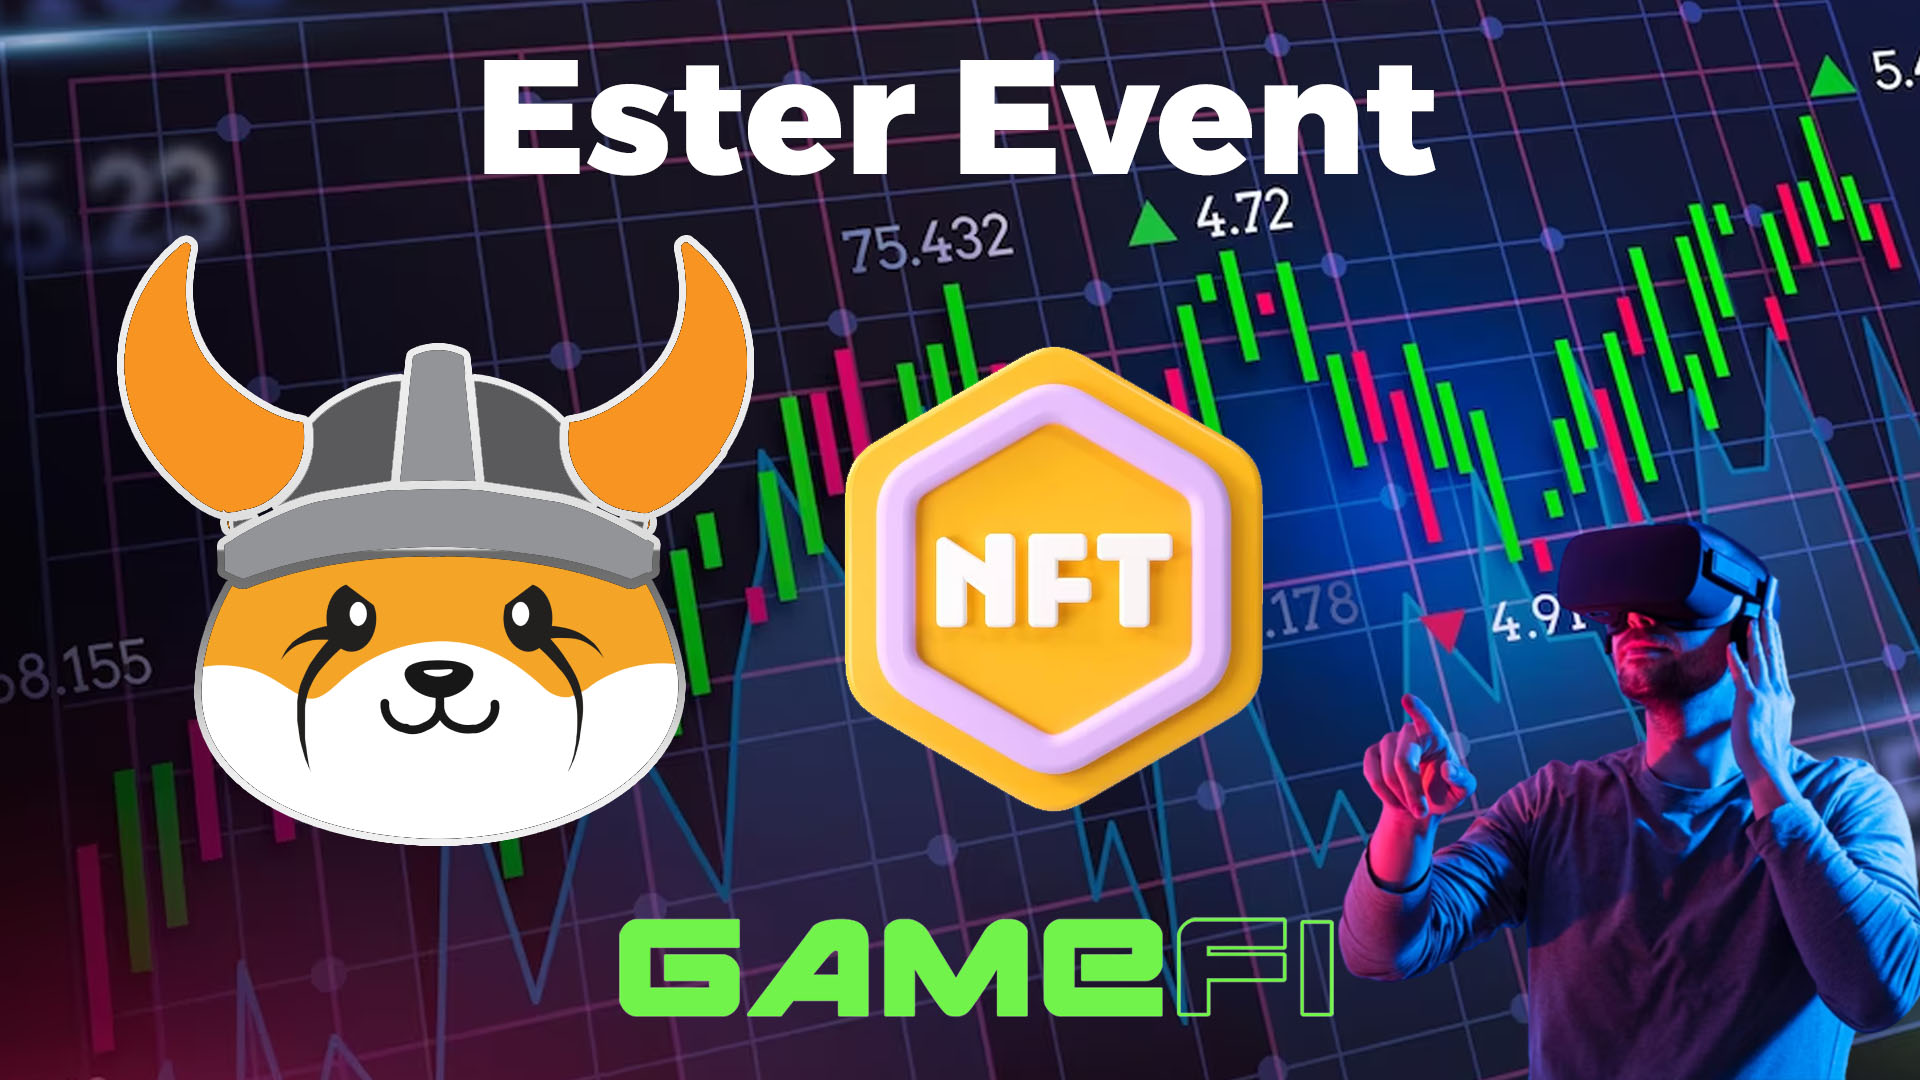 Floki Launches Easter Event in Valhalla NFT GameFi Metaverse